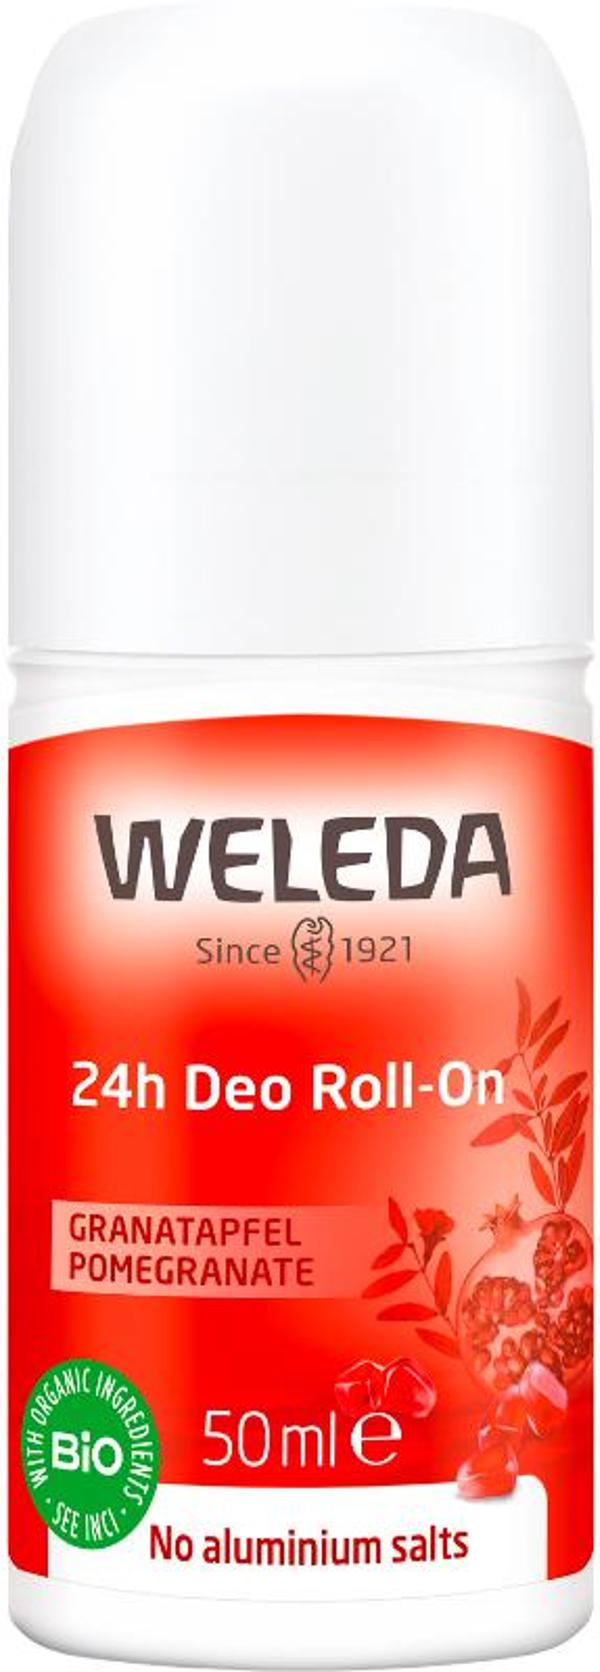 Produktfoto zu Granatapfel 24h Deo Roll-On 50 ml Weleda